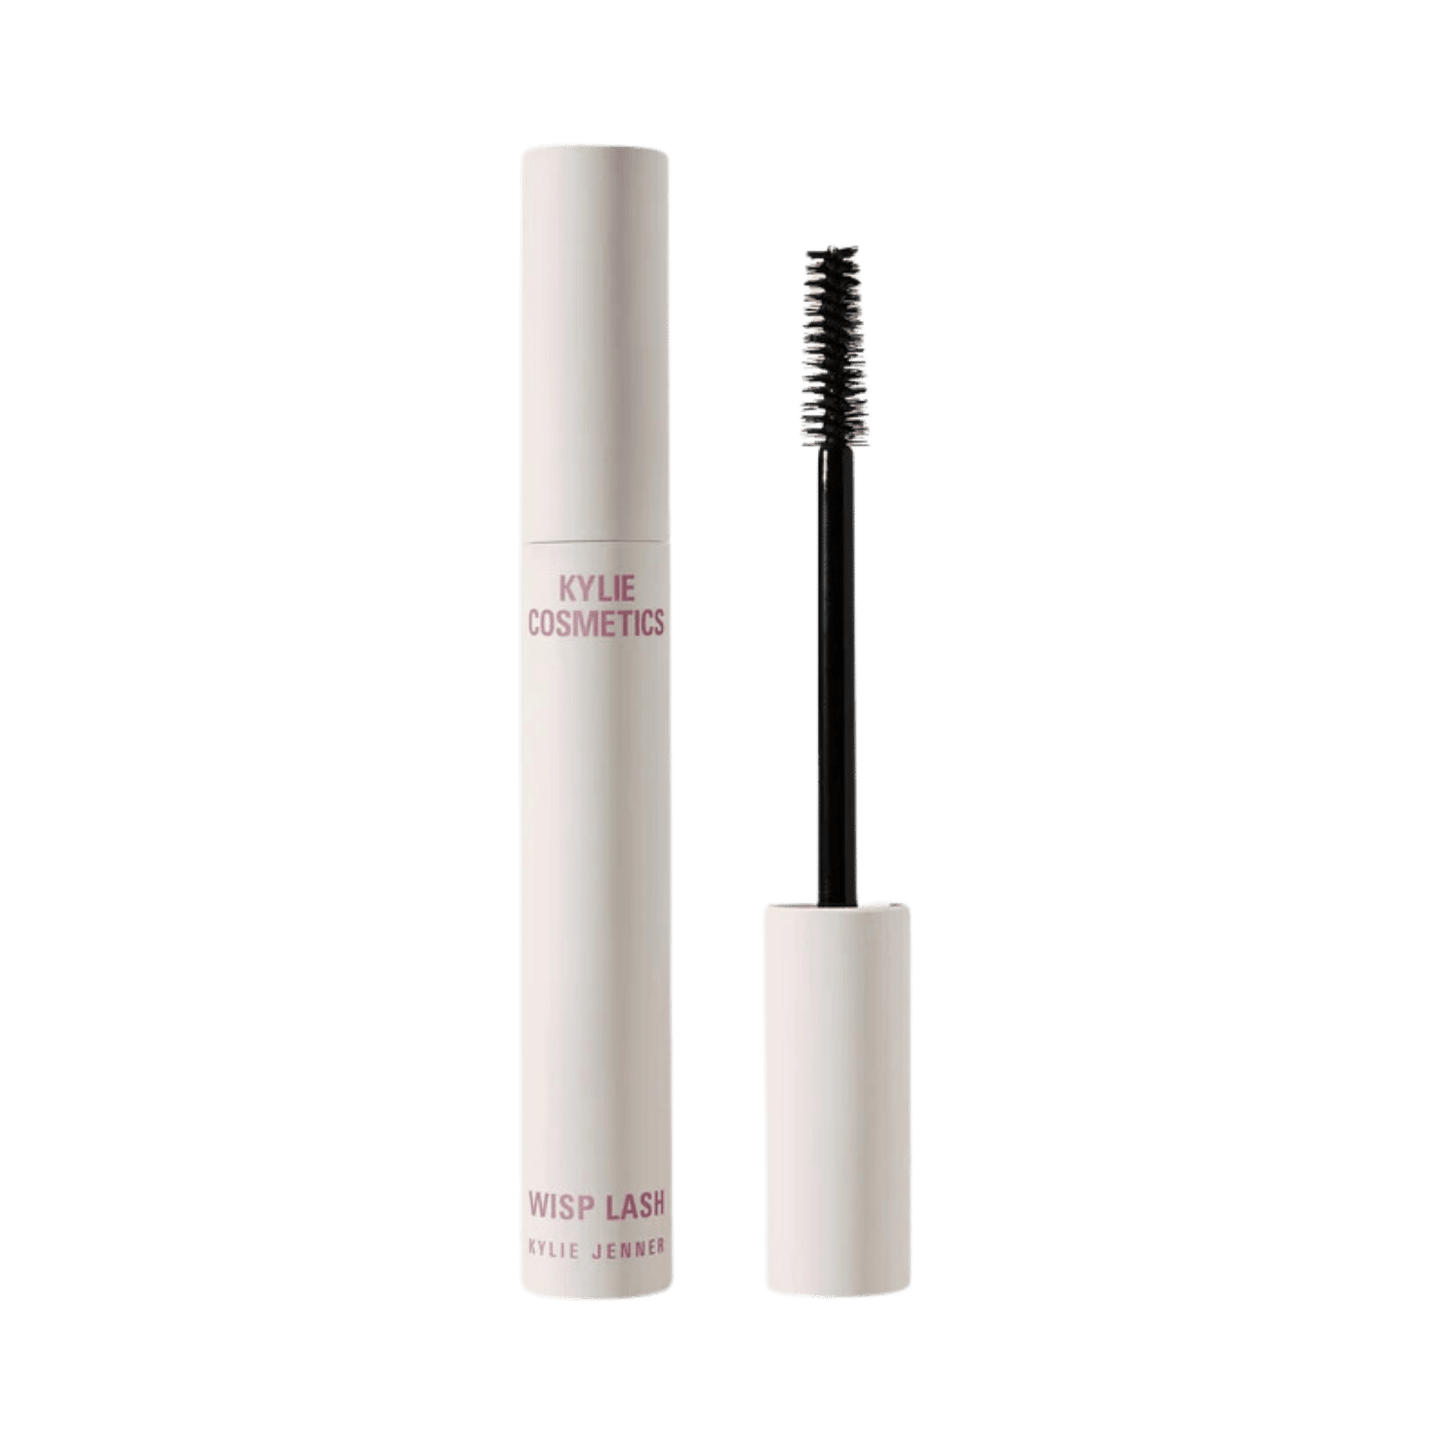 Kyile Cosmetics wisp lash mascara (12ml)